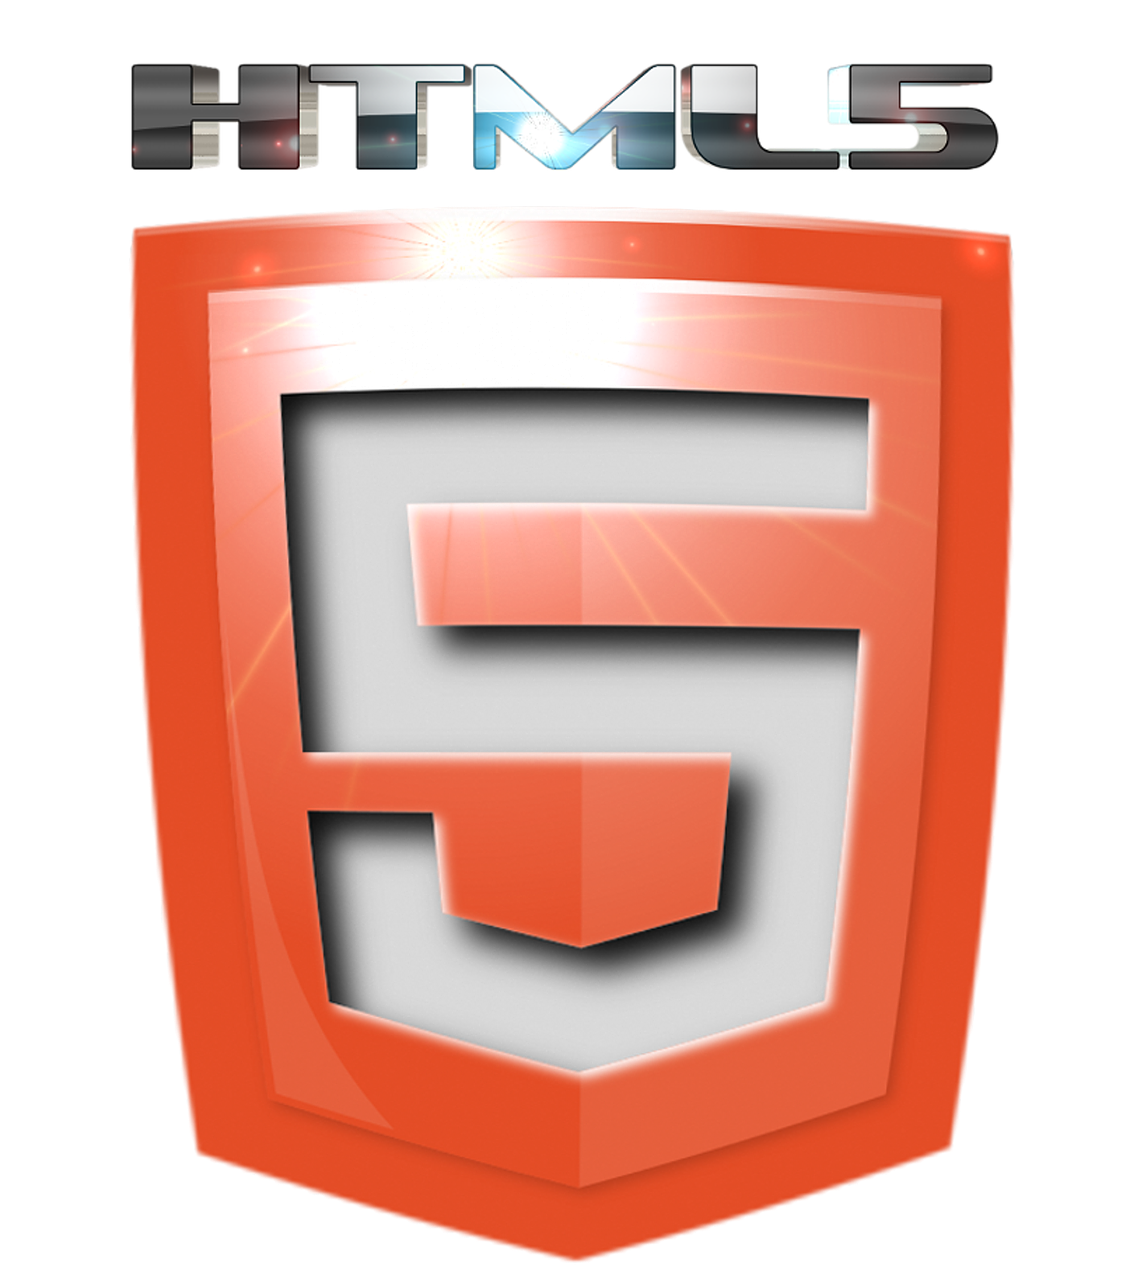 html5 branding and website design company